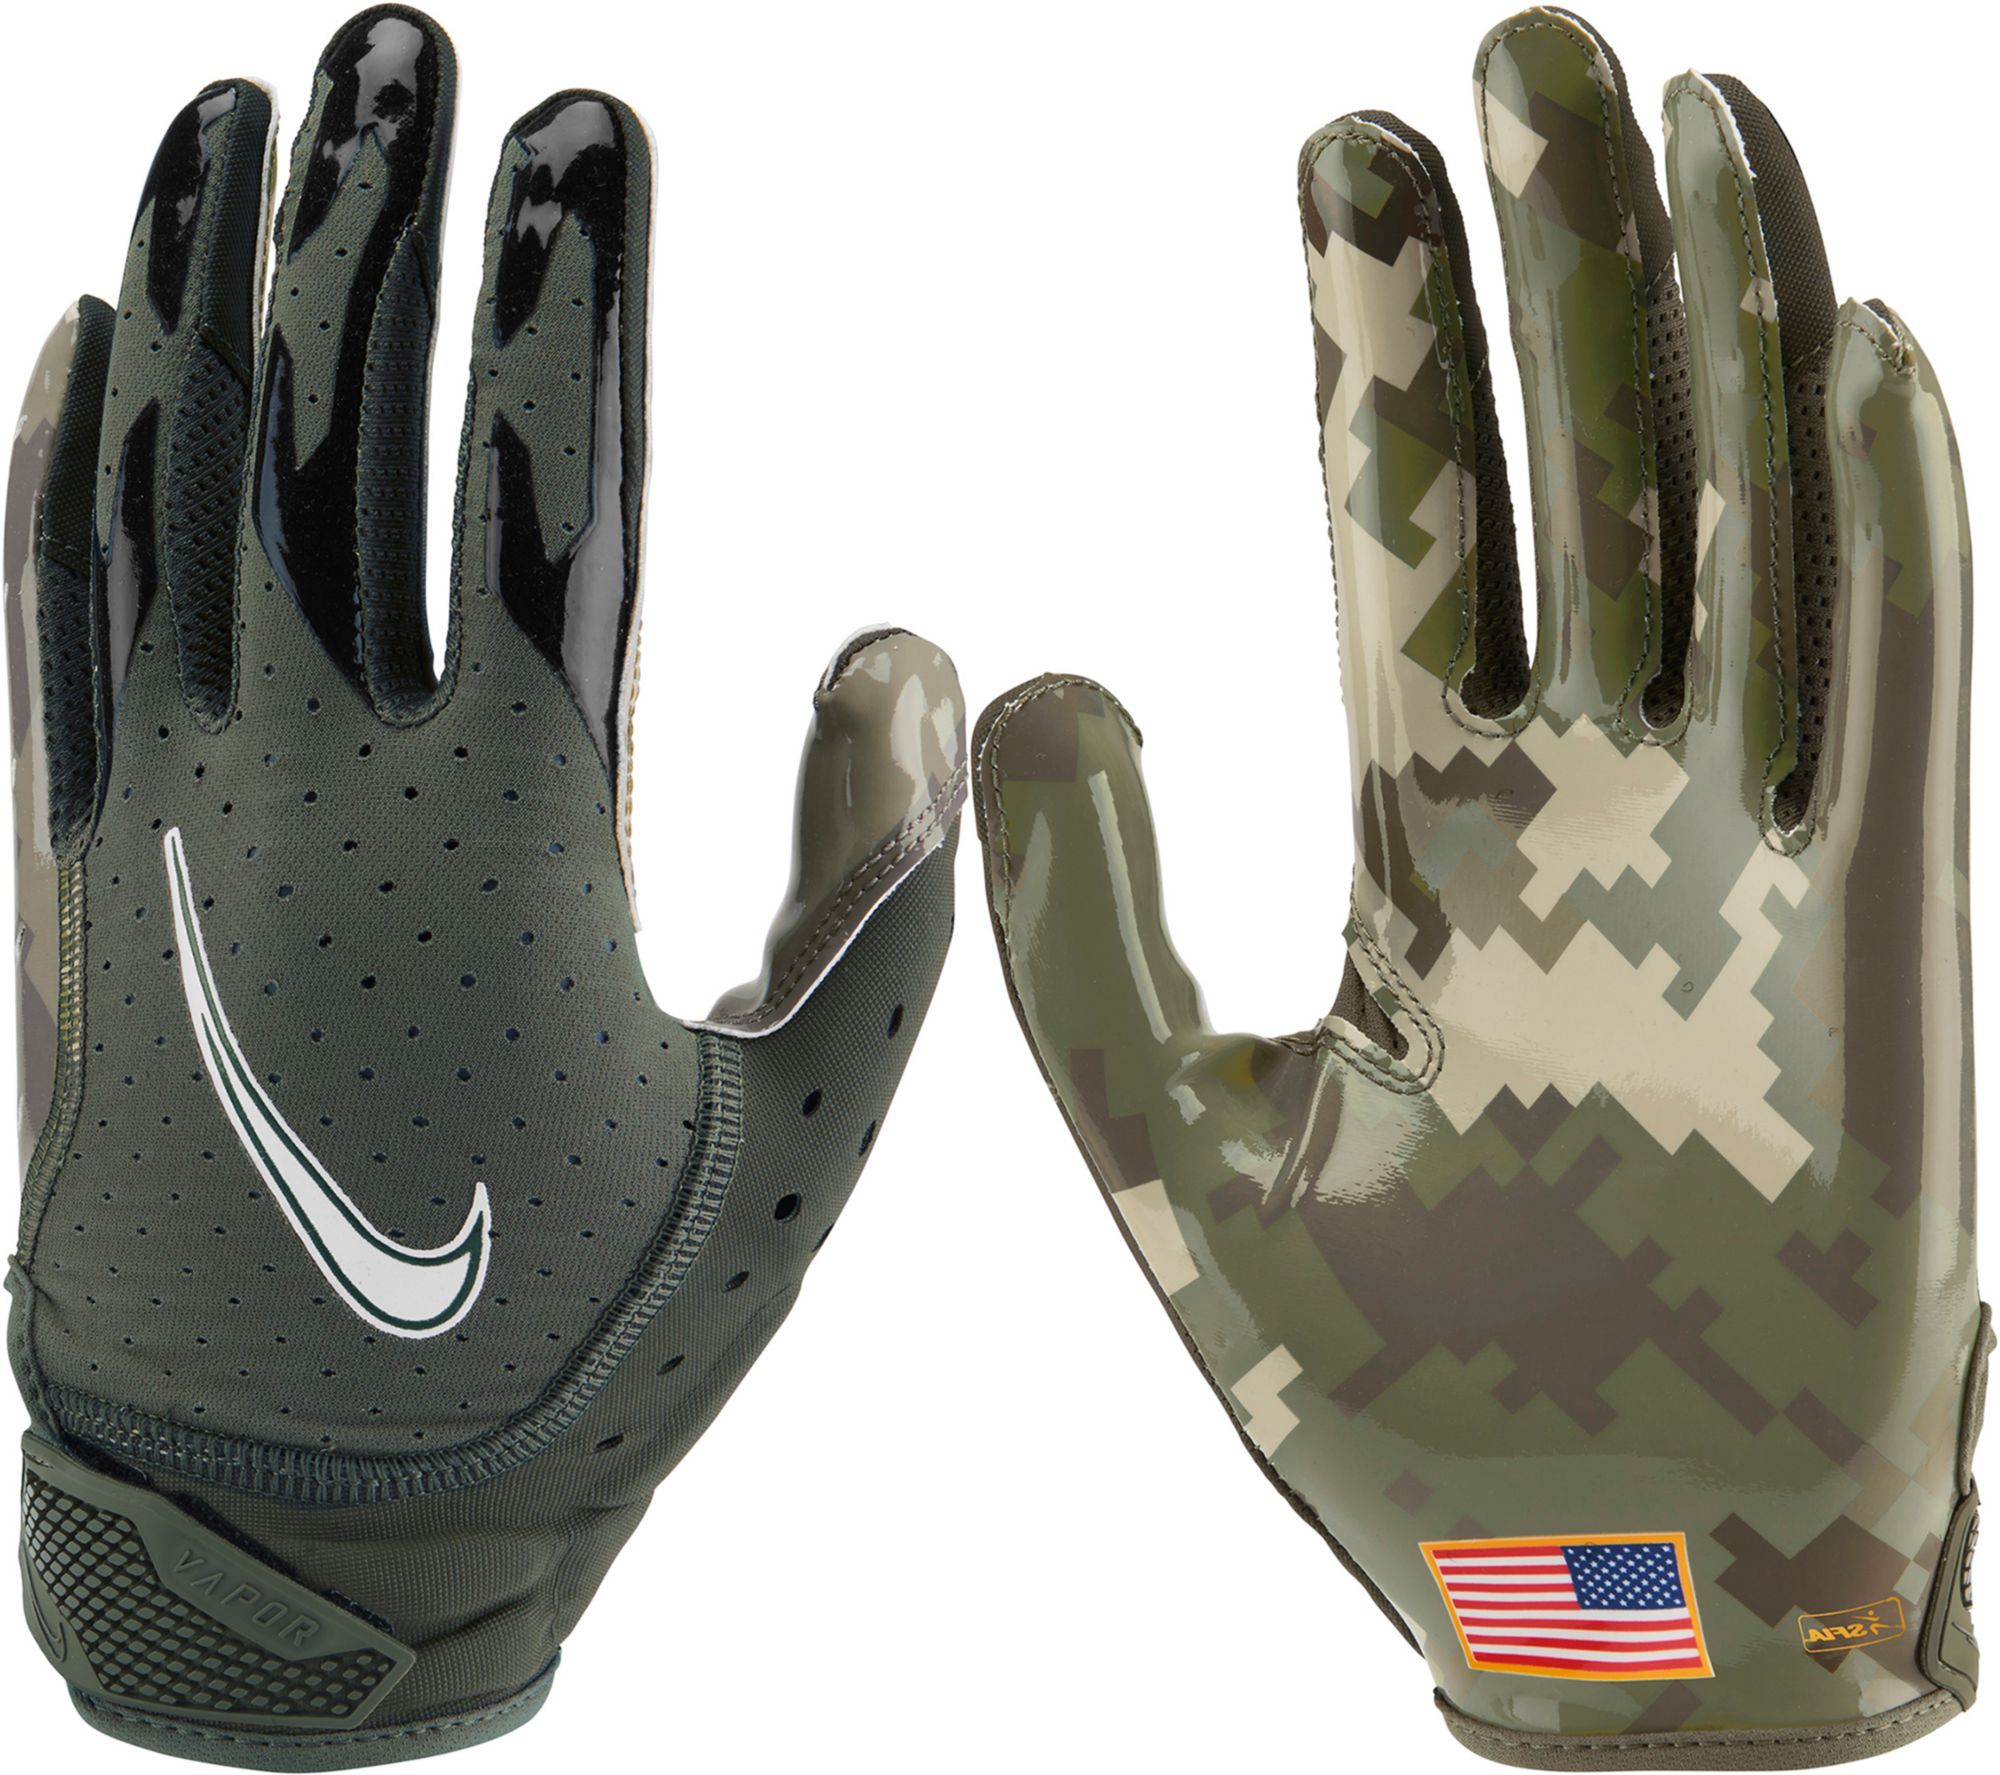 Nike Vapor Jet 3.0 Men's Receiver Gloves - Team Orange/Black